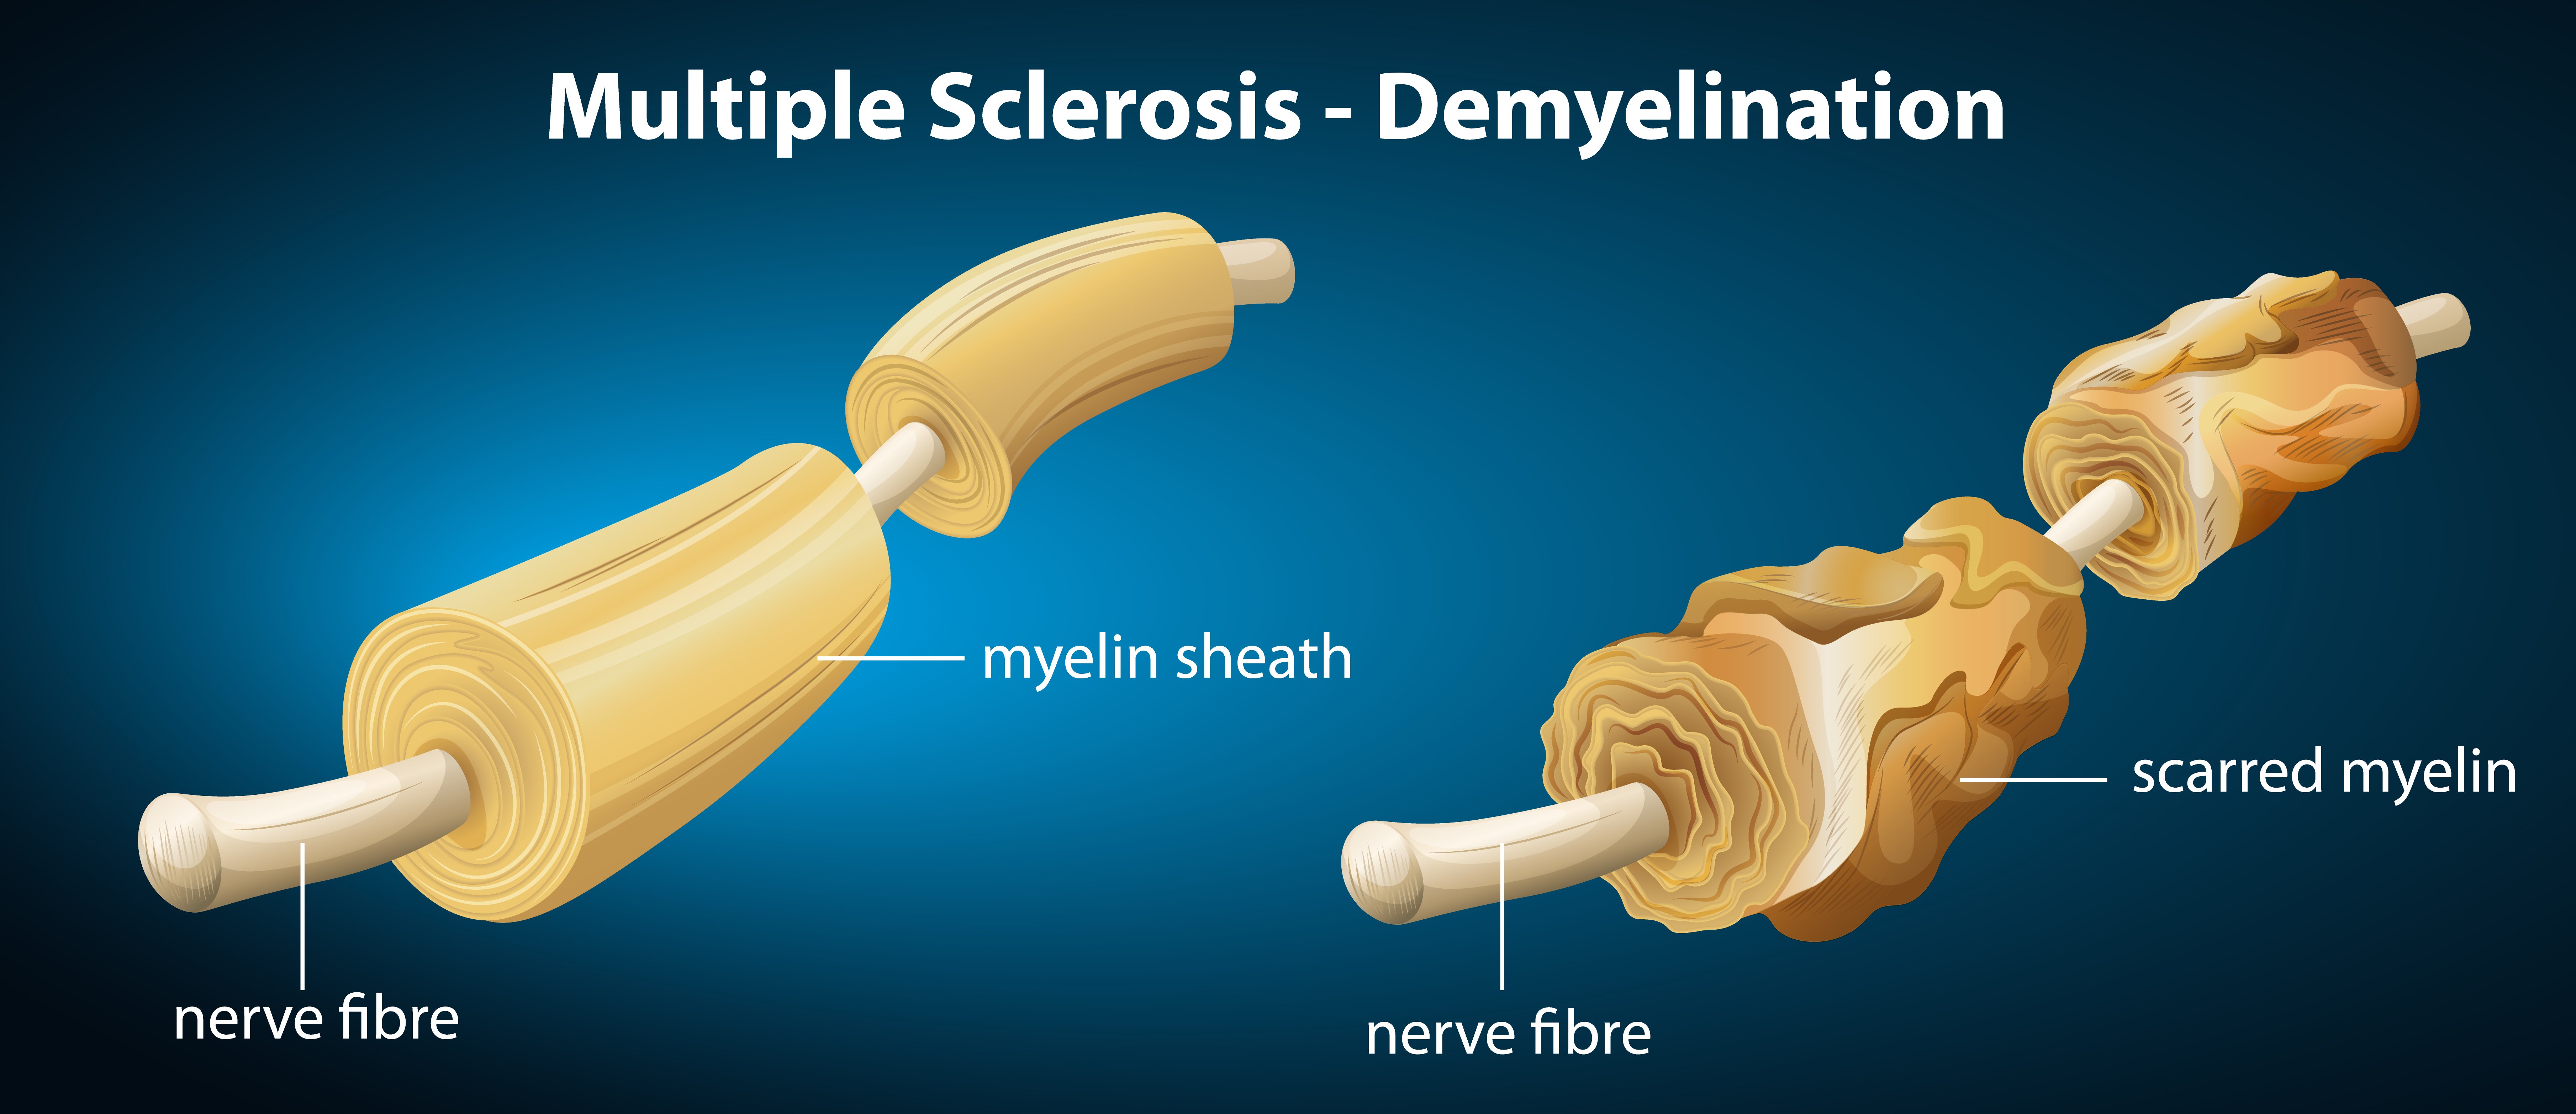 demyelination Multiple sclerosis (MS)